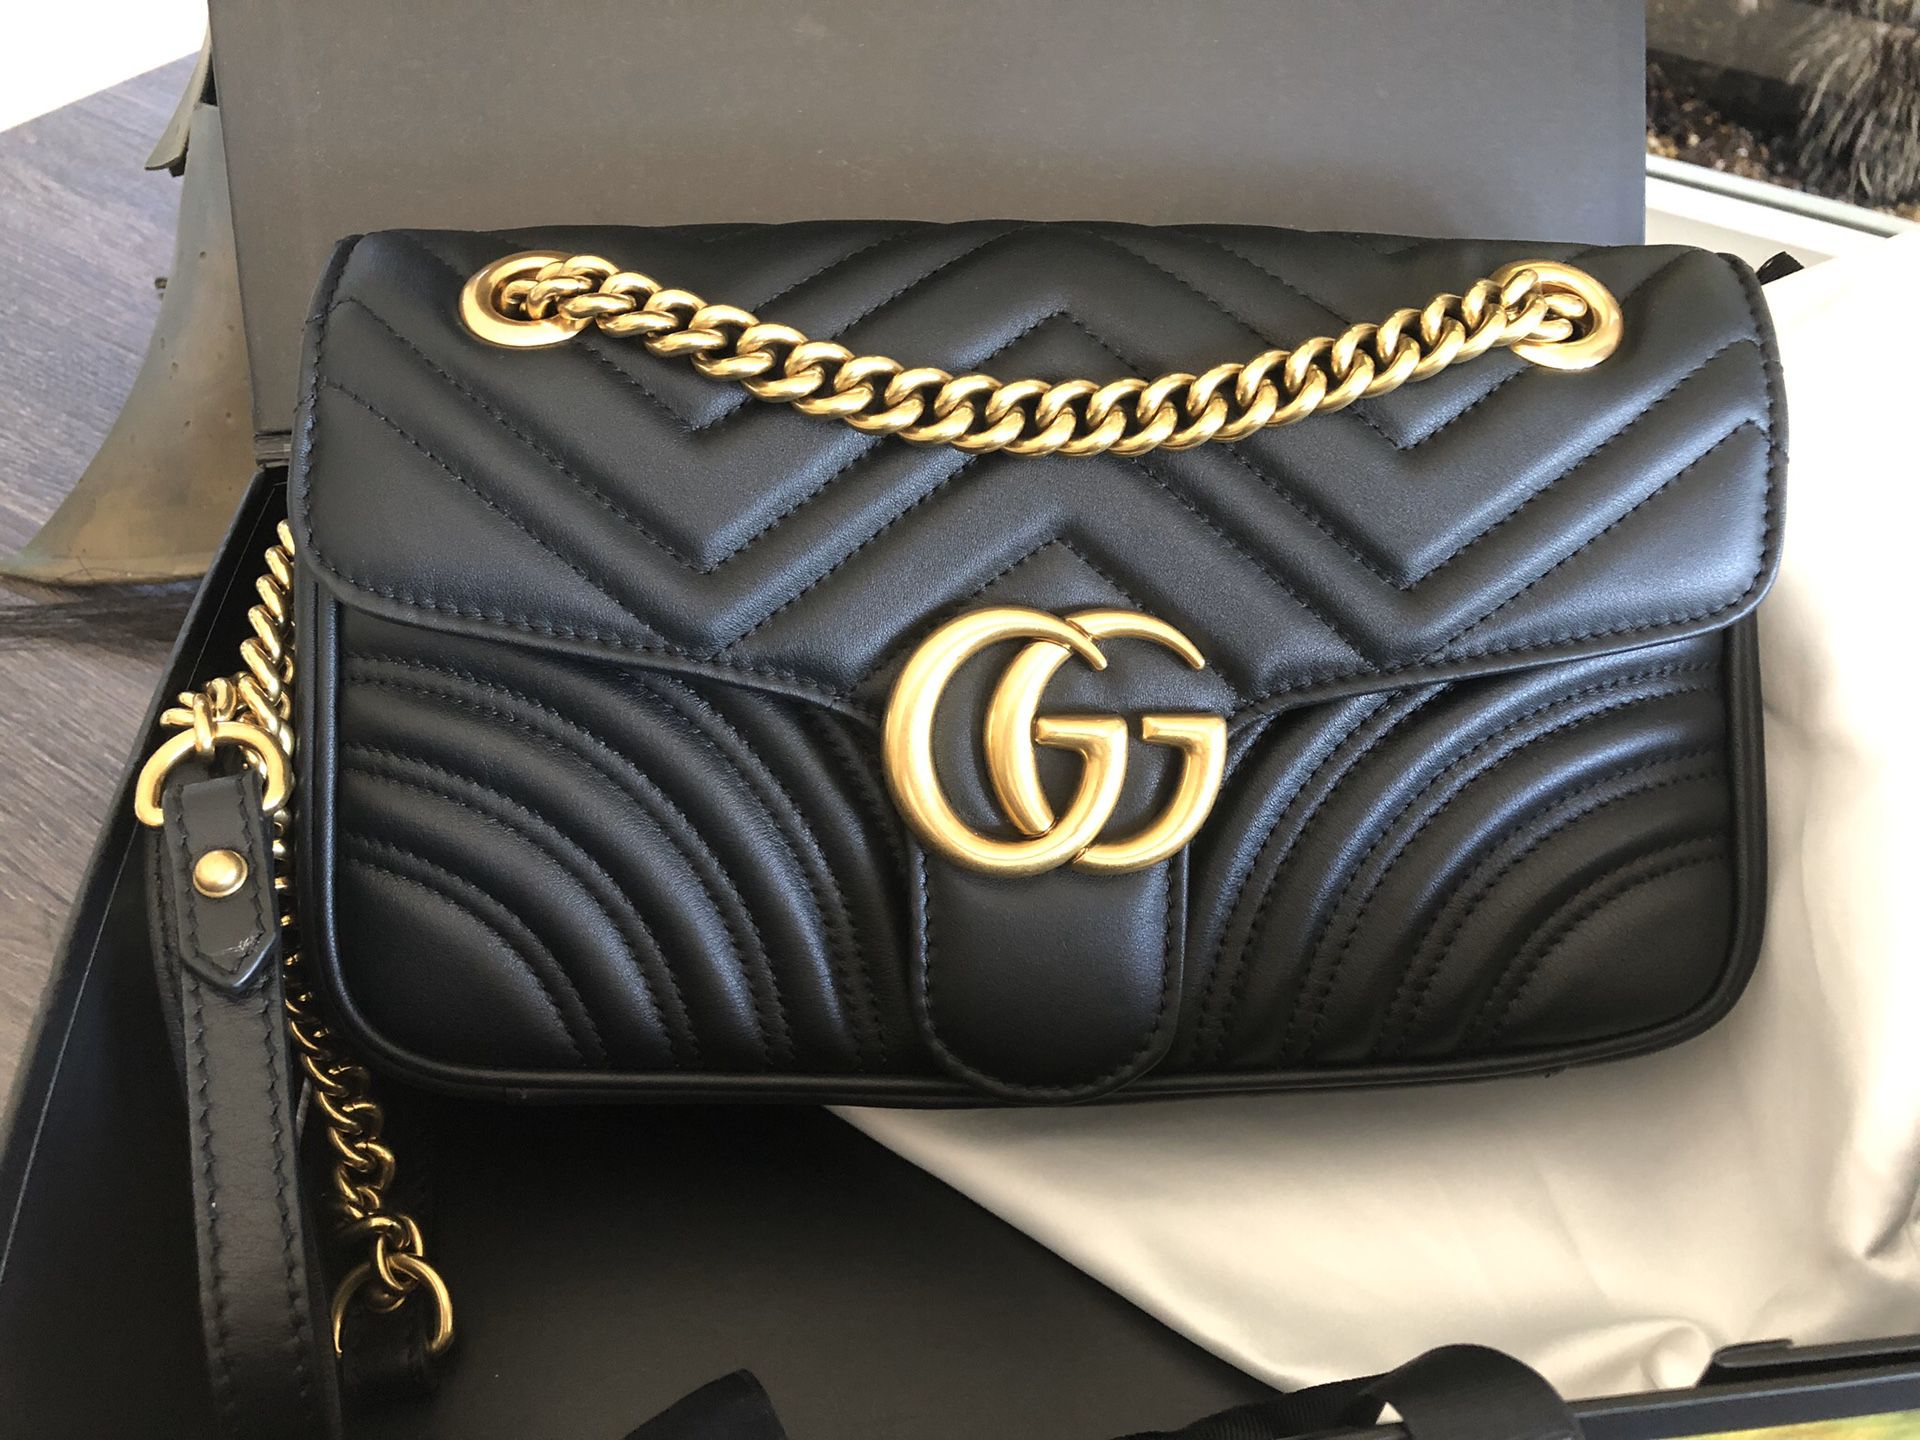 Gucci Marmont shoulder bag